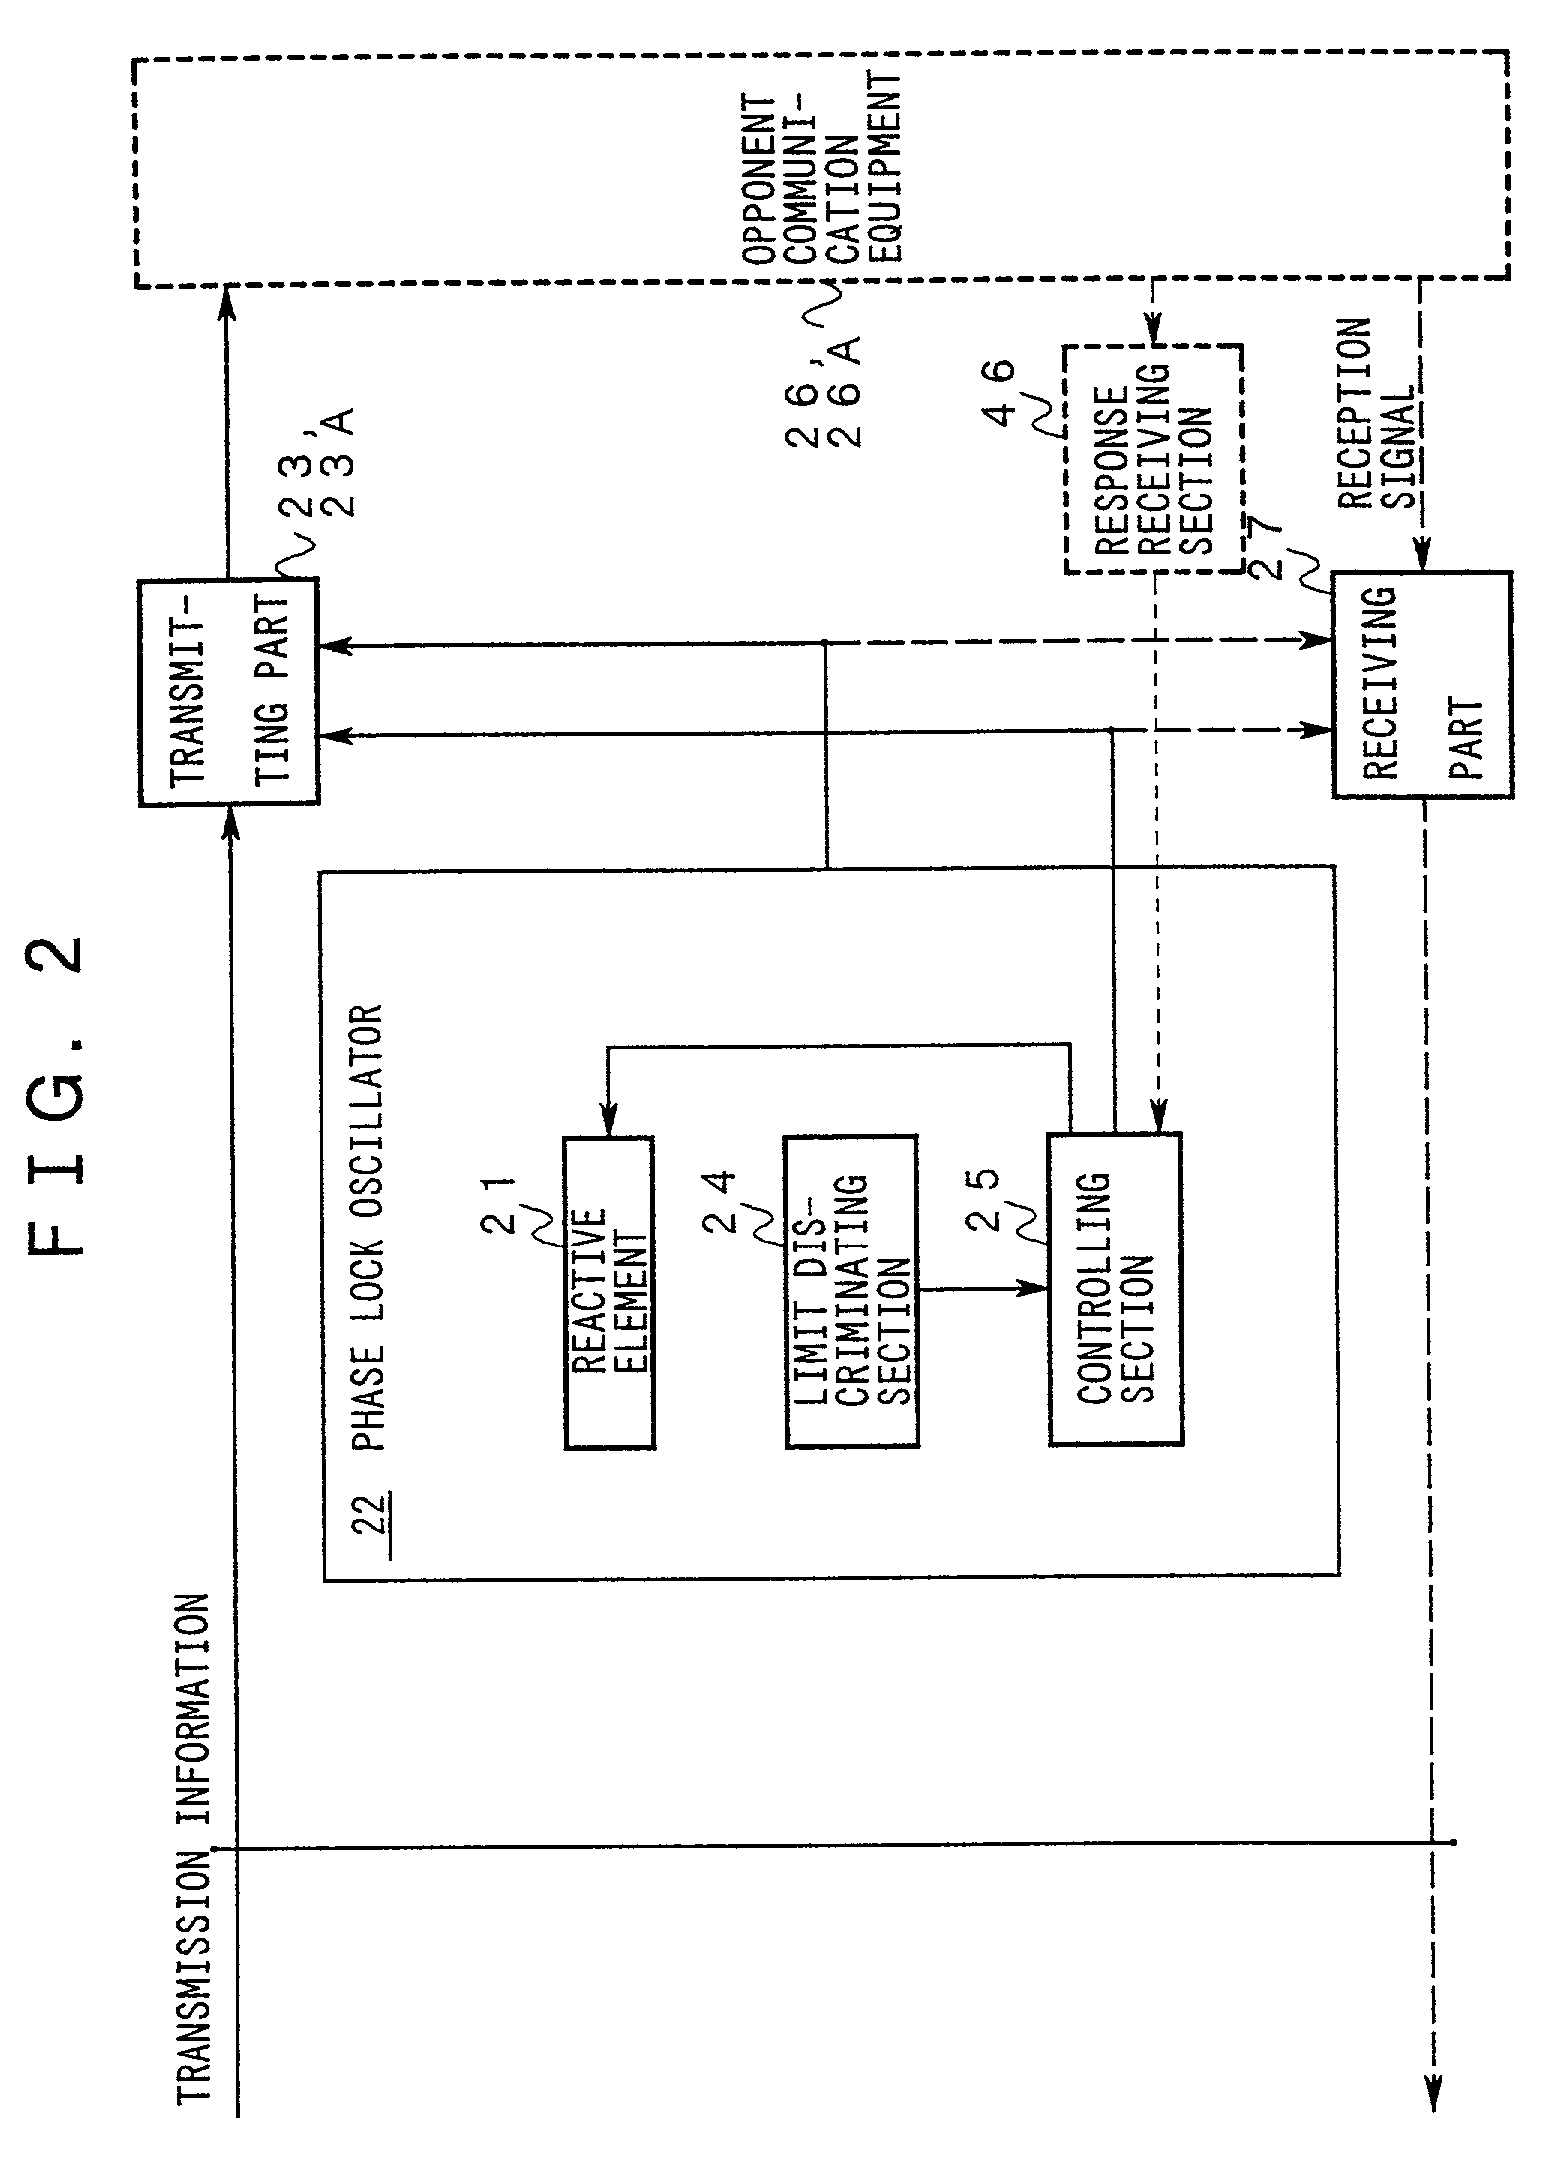 Phase lock oscillator and communication equipment